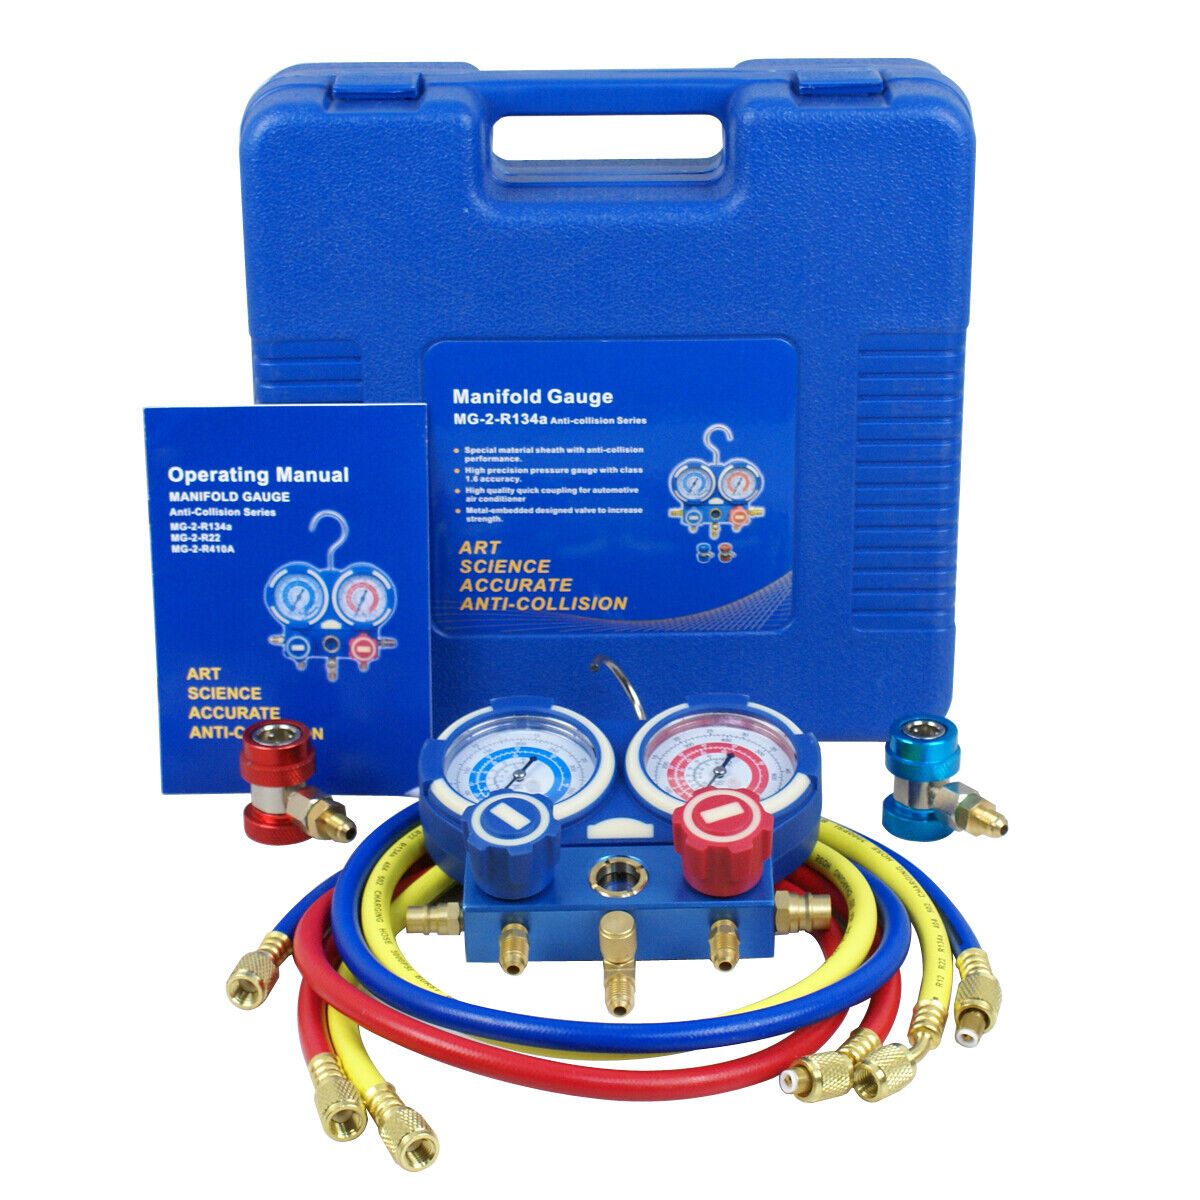 Manifold Gauge Set HVAC Refrigeration Kit R134a R410a R22 AC A/C Air Condition